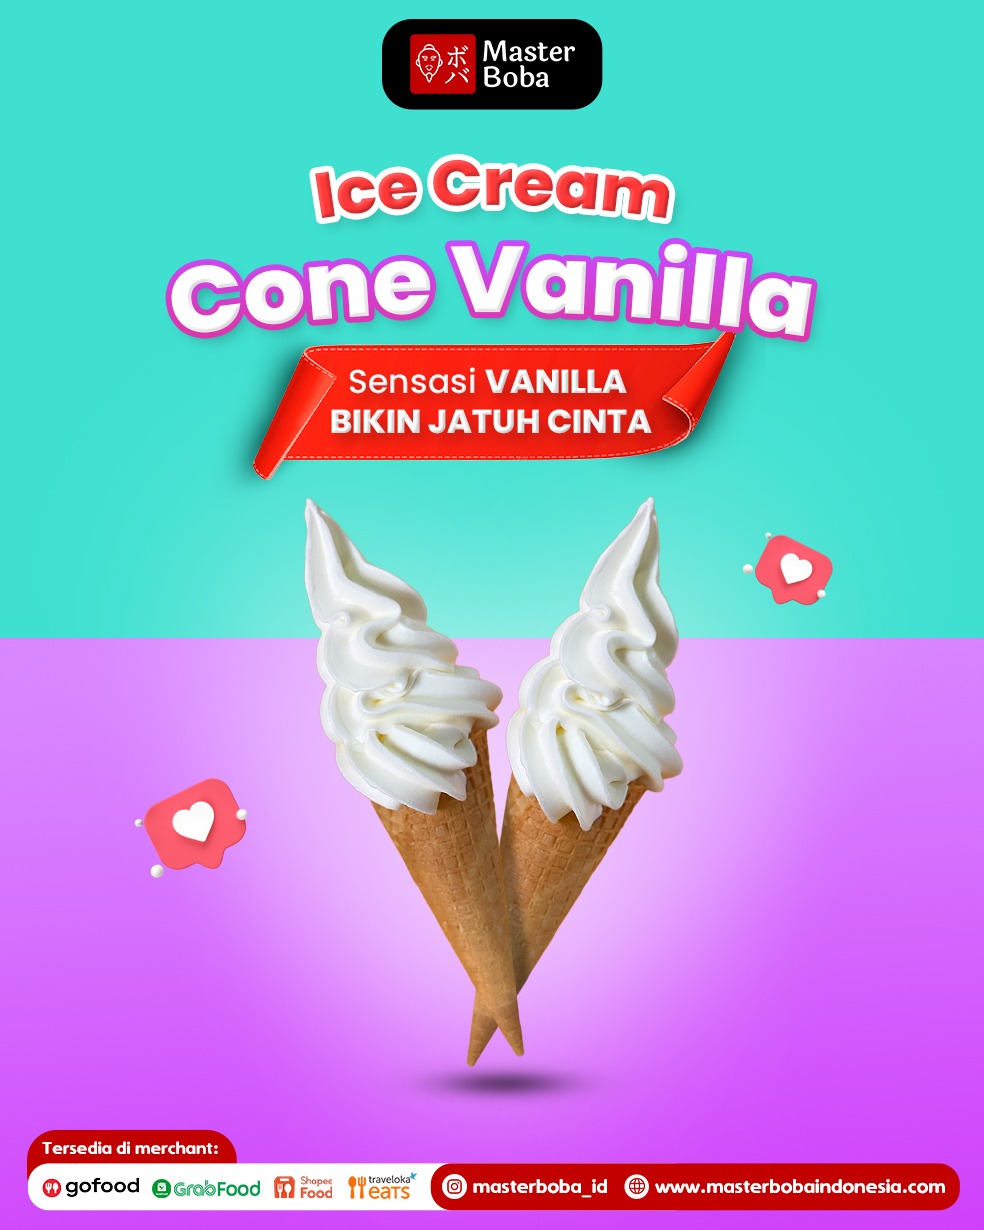 Cone Vanilla